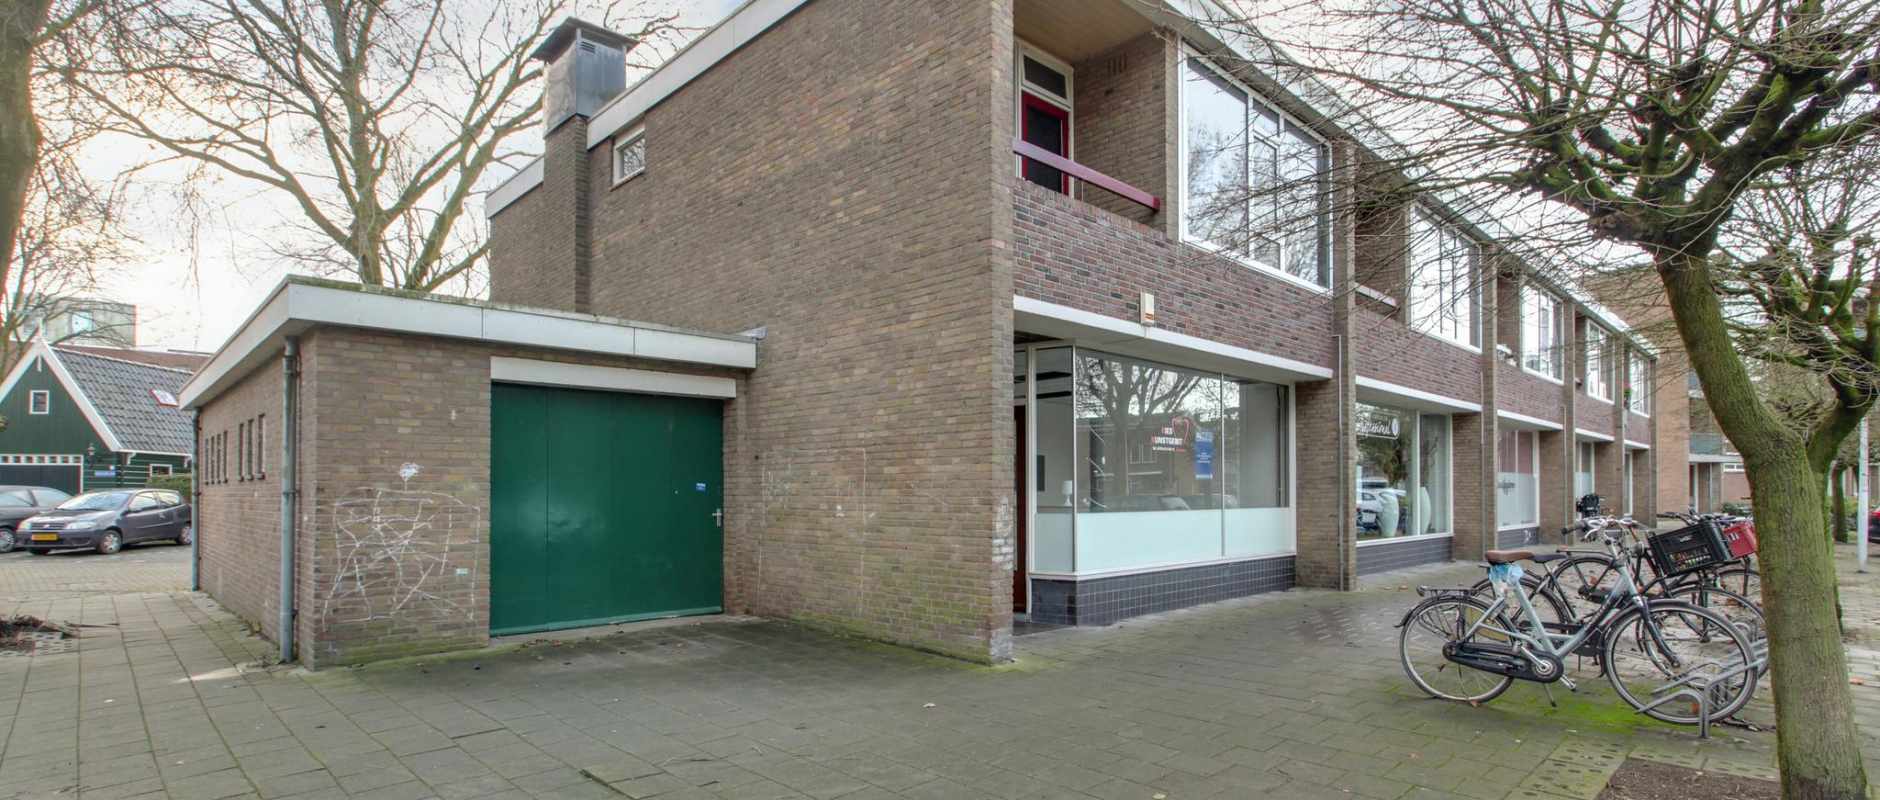 Woning te koop aan de Hof van Holland 55 te Zaandam